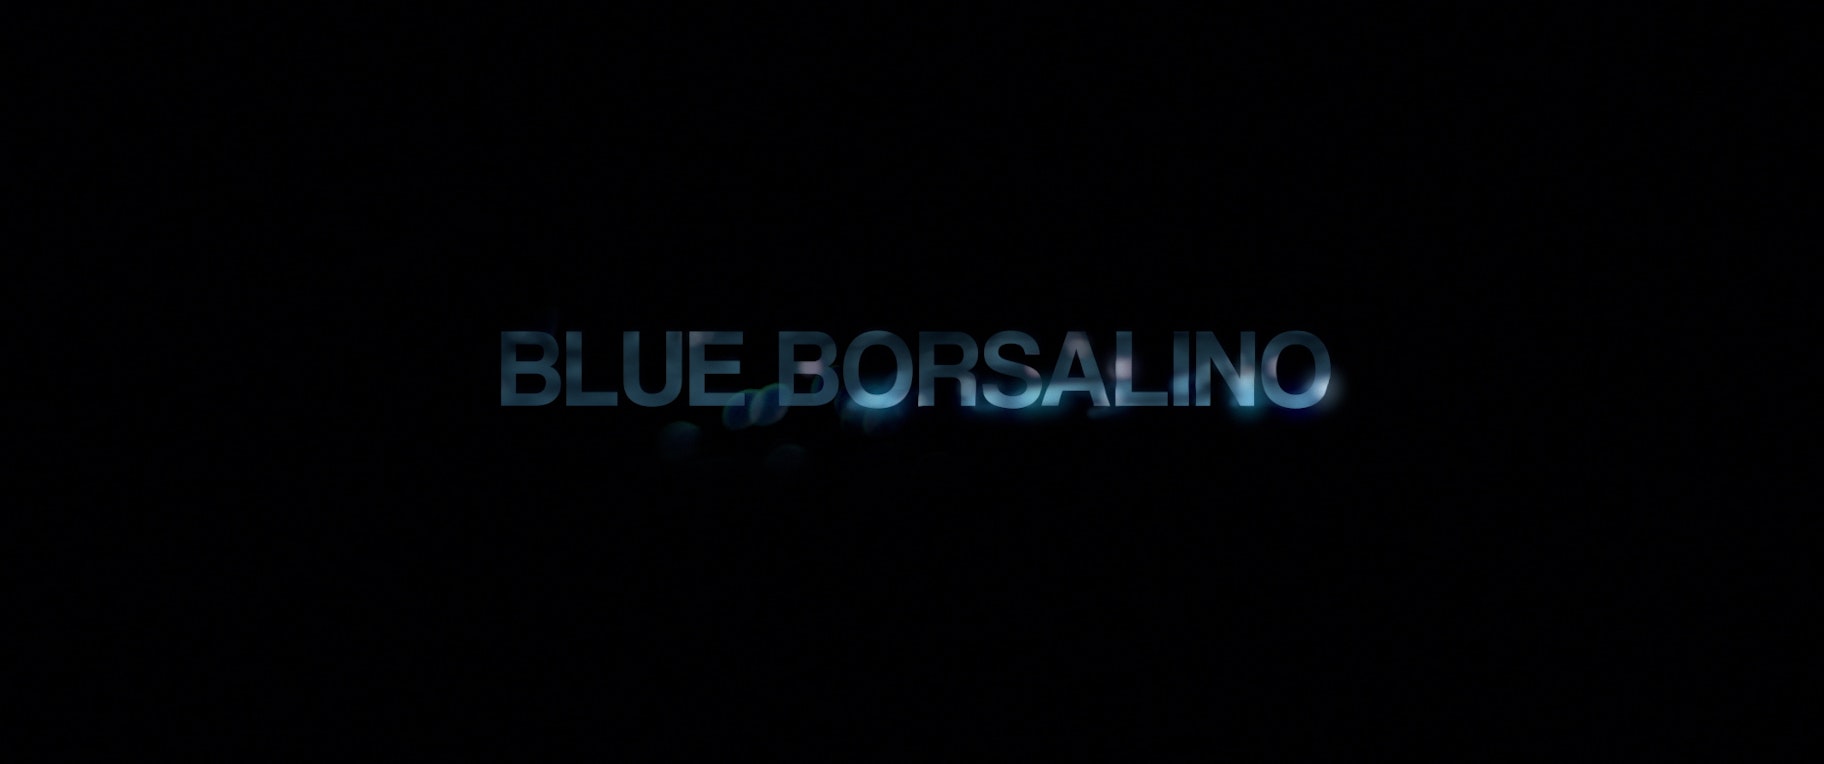 BLUE BORSALINO -